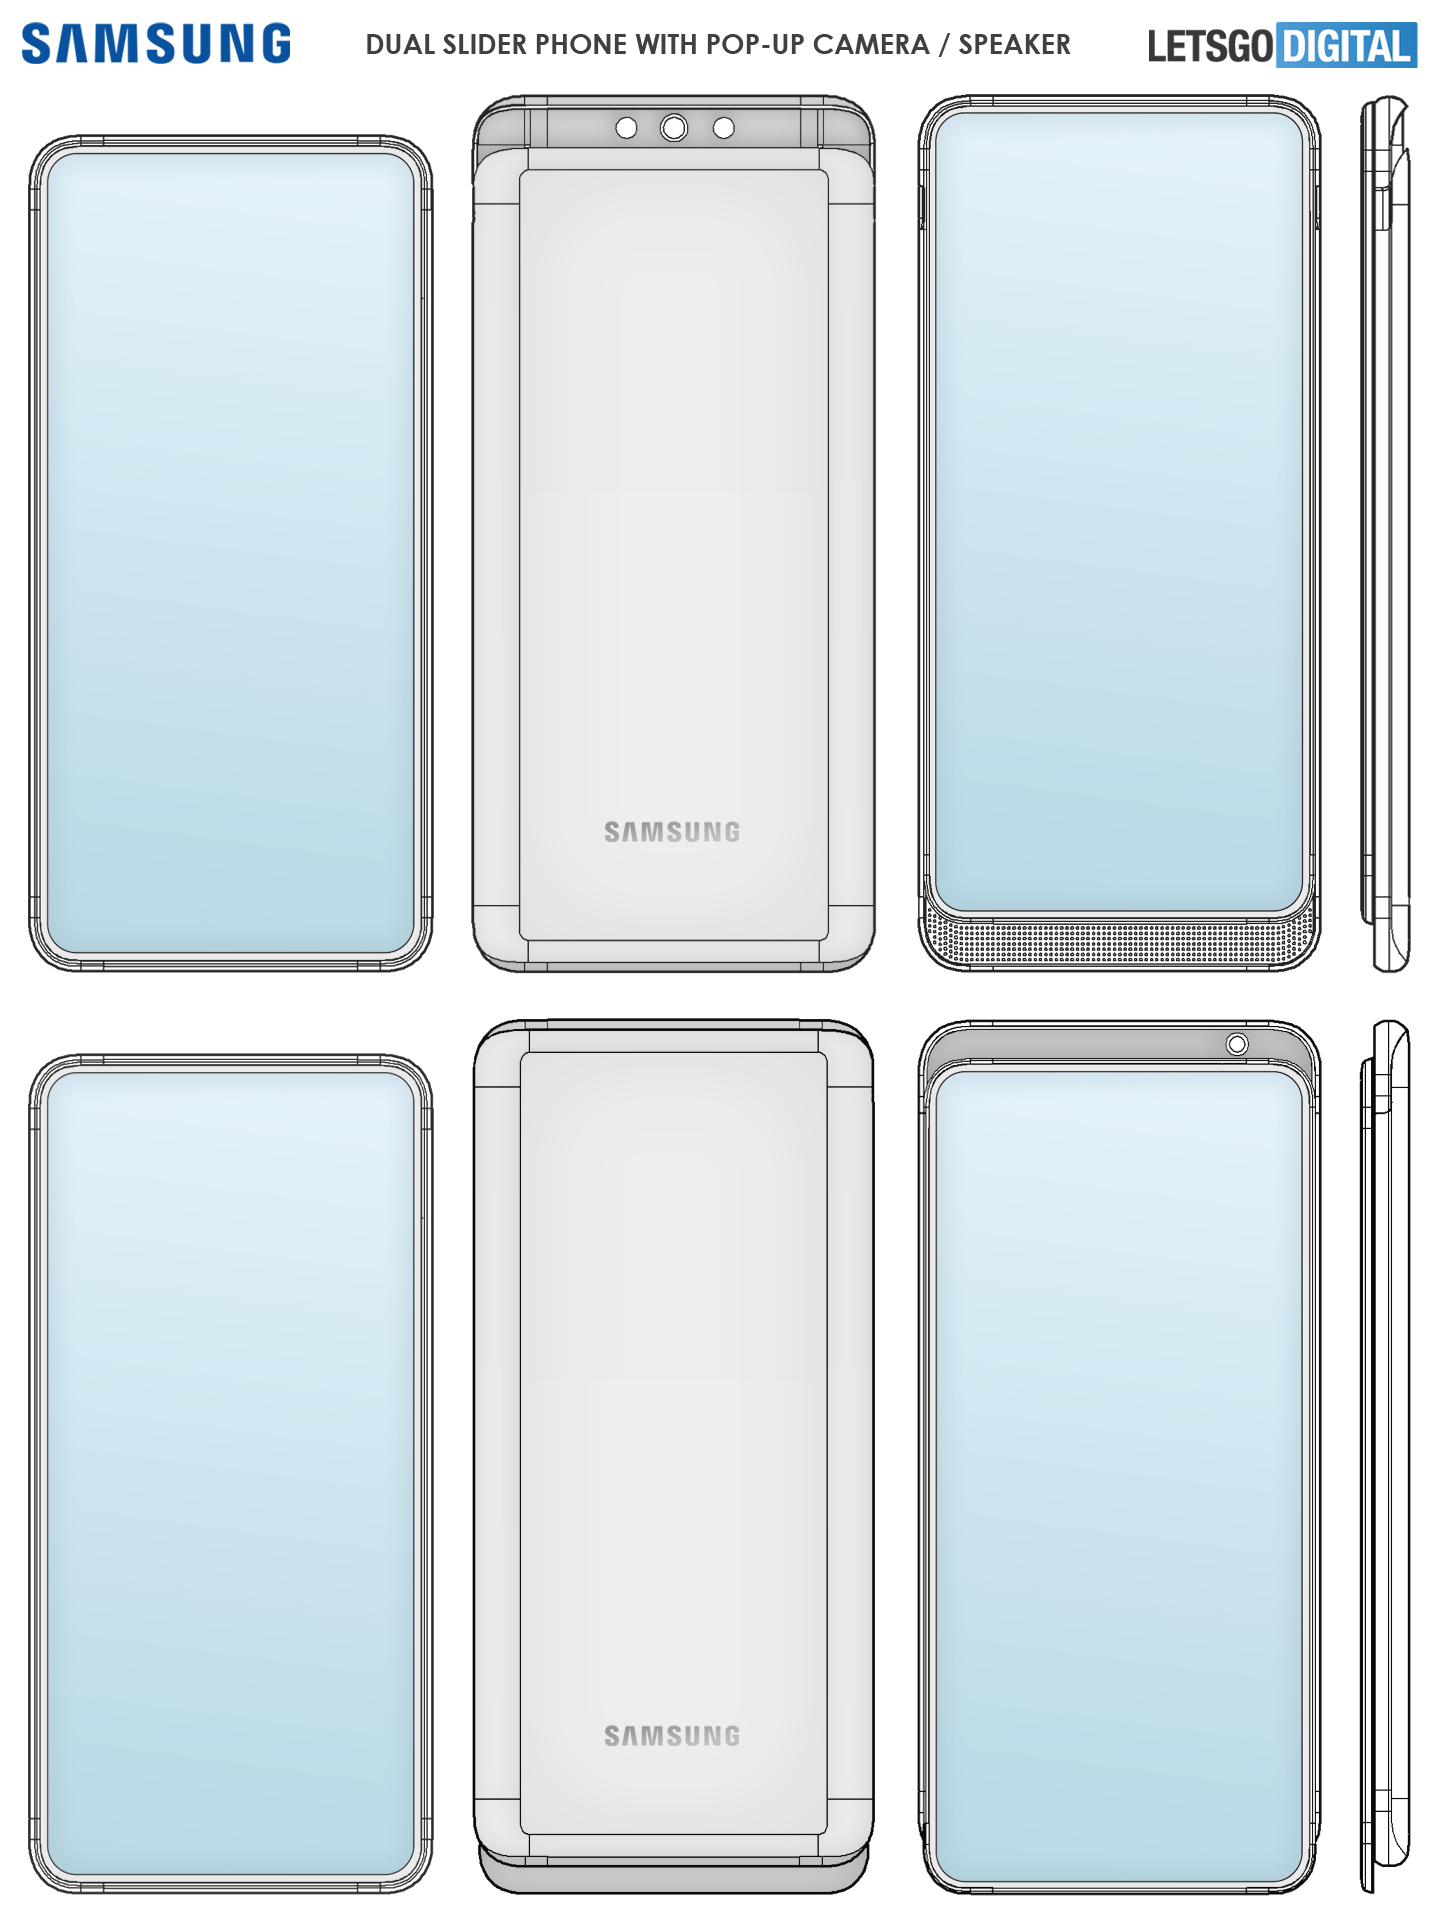 Samsung dual slider smartphone